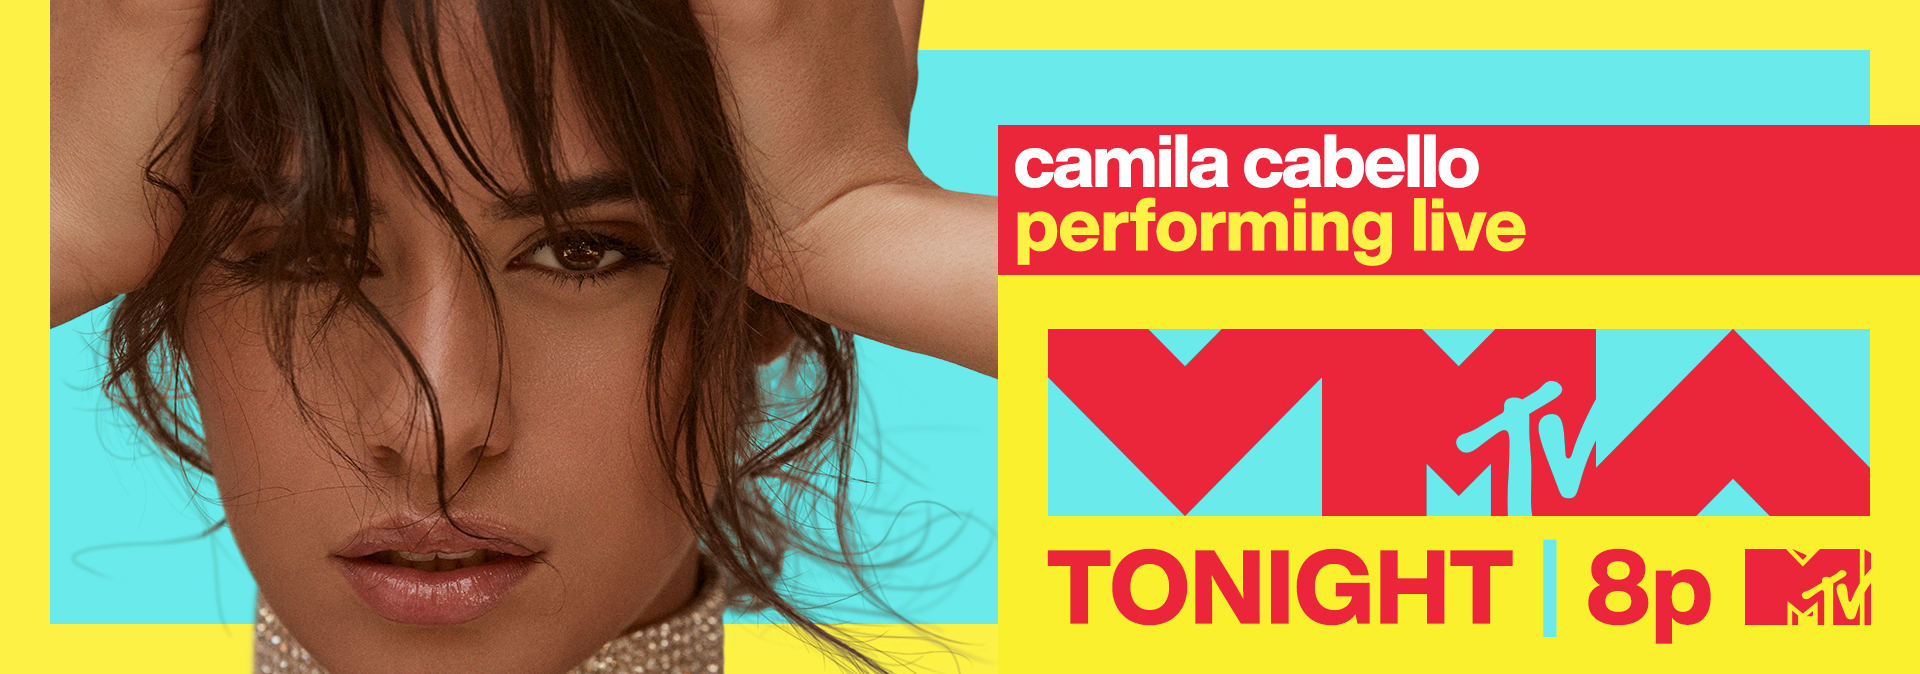 VMA-TaxiTop-Camila-Tonight.png